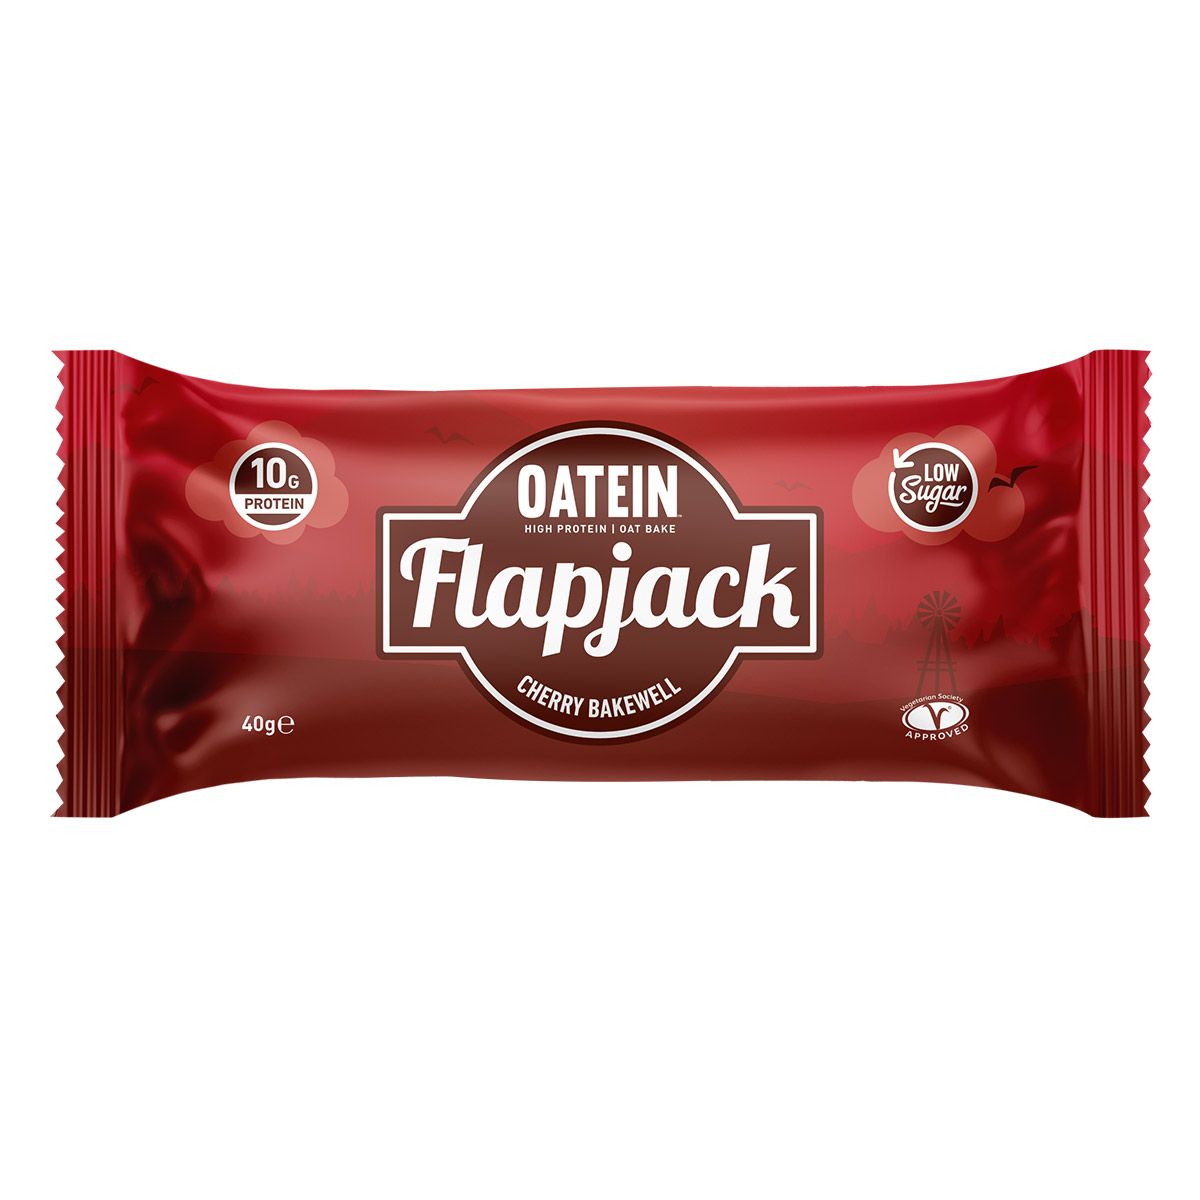 Oatein Flapjack - Cherry Bakewell 40g